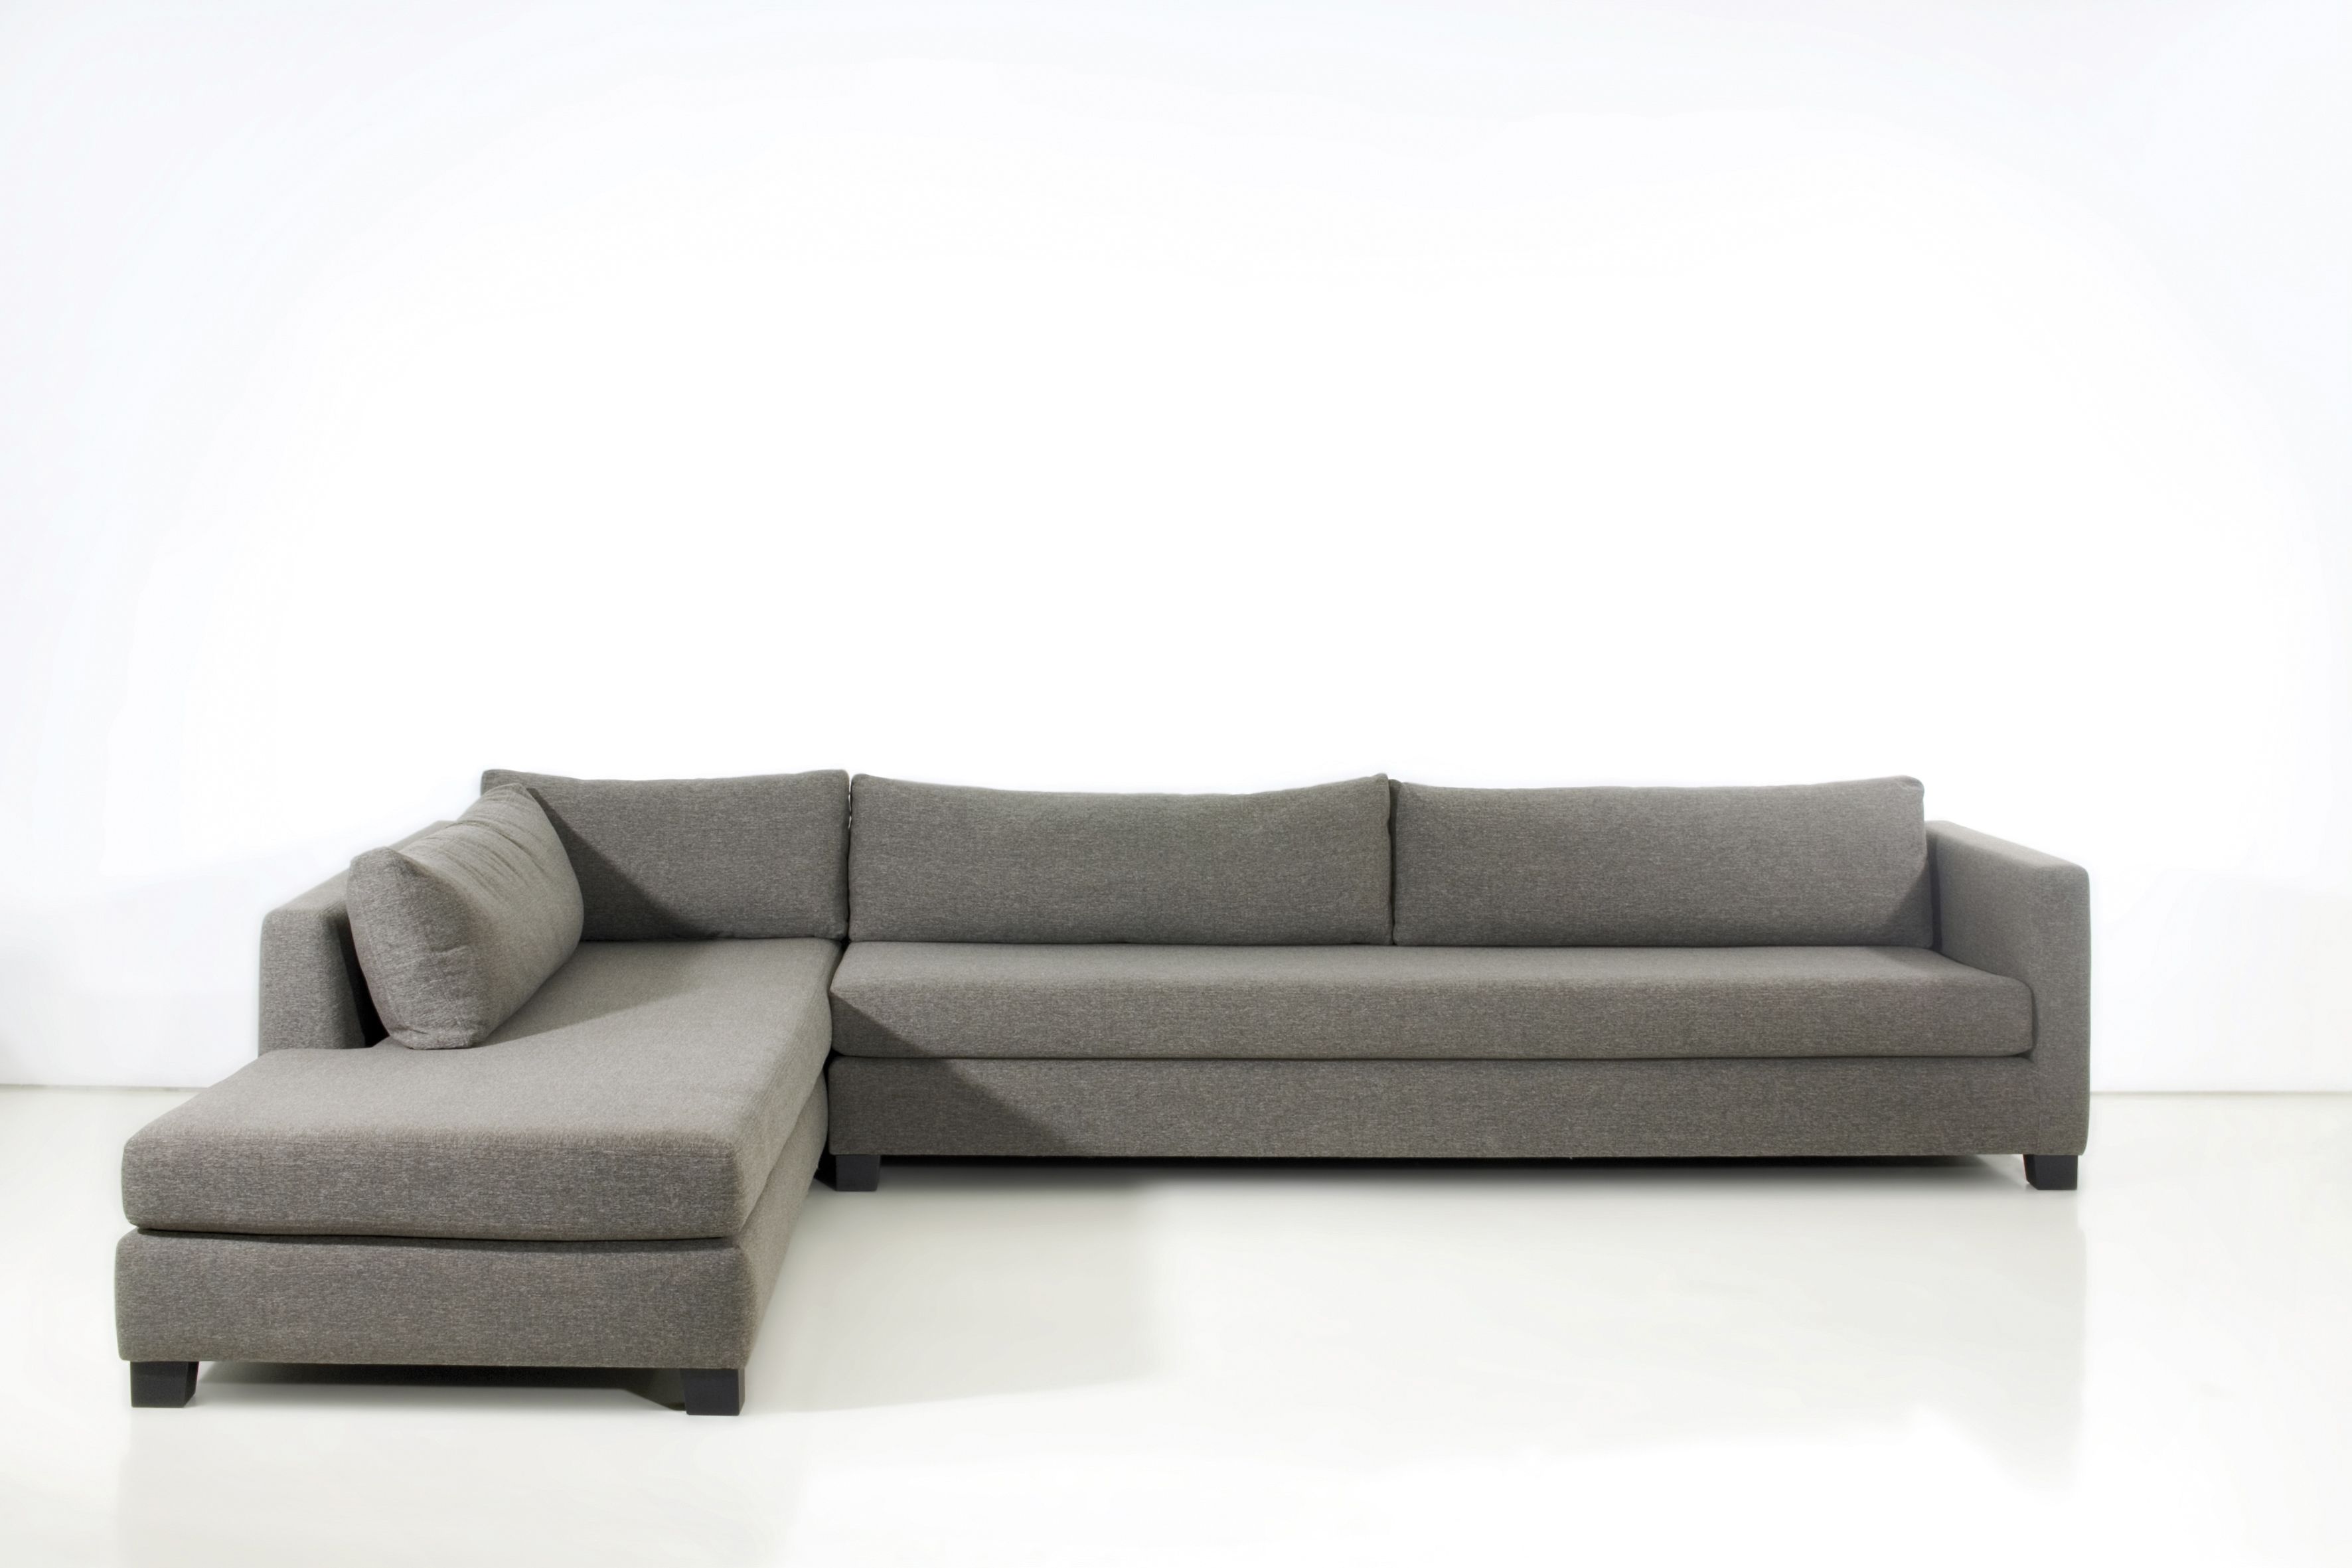 Interni Edition Newport Contemporary Furniture Sofa Pertaining To Newport Sofas (View 8 of 15)